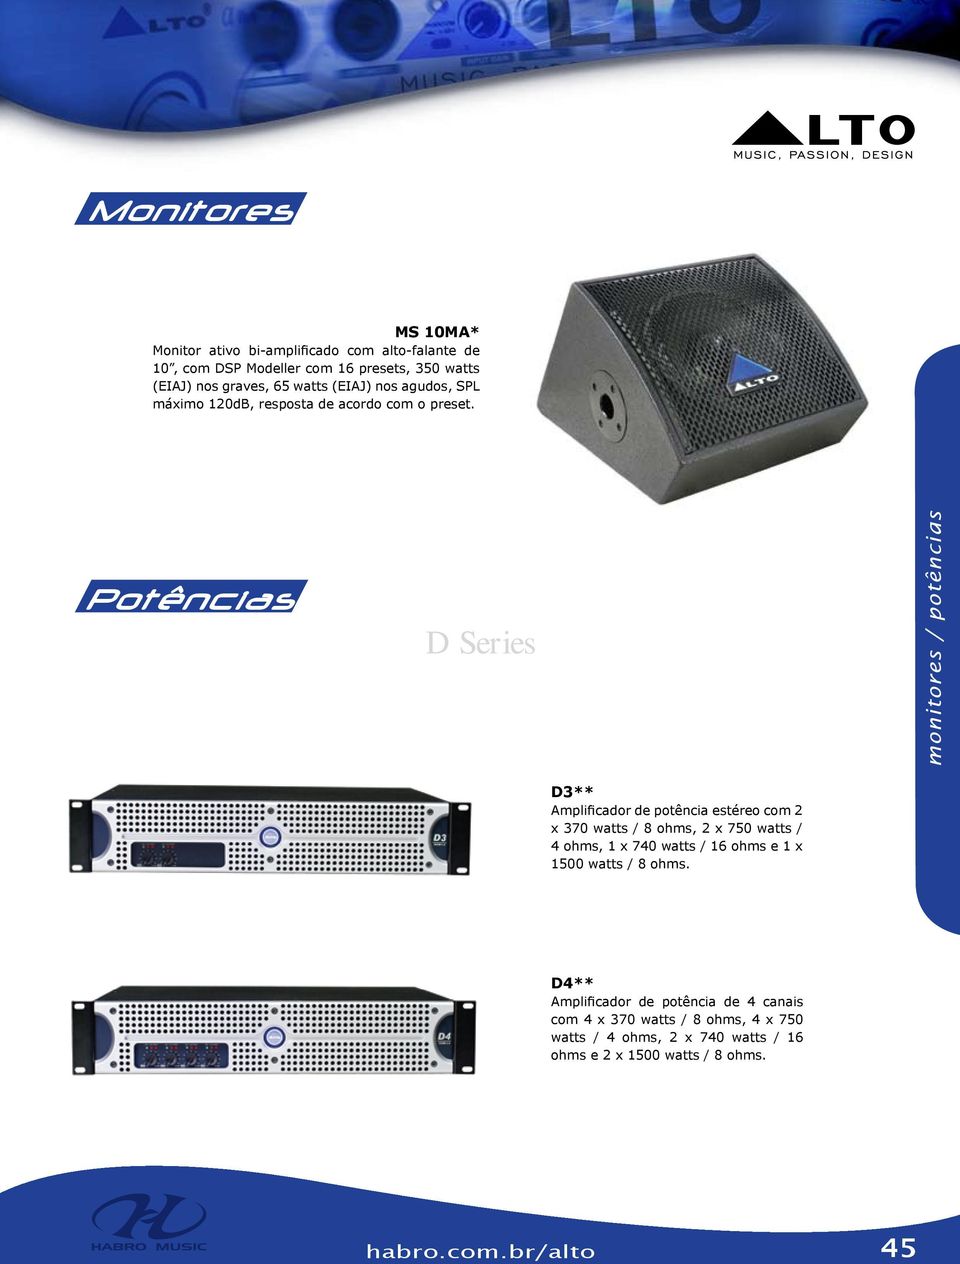 Potências D Series monitores / potências D3** Amplificador de potência estéreo com 2 x 370 watts / 8 ohms, 2 x 750 watts / 4 ohms, 1 x 740